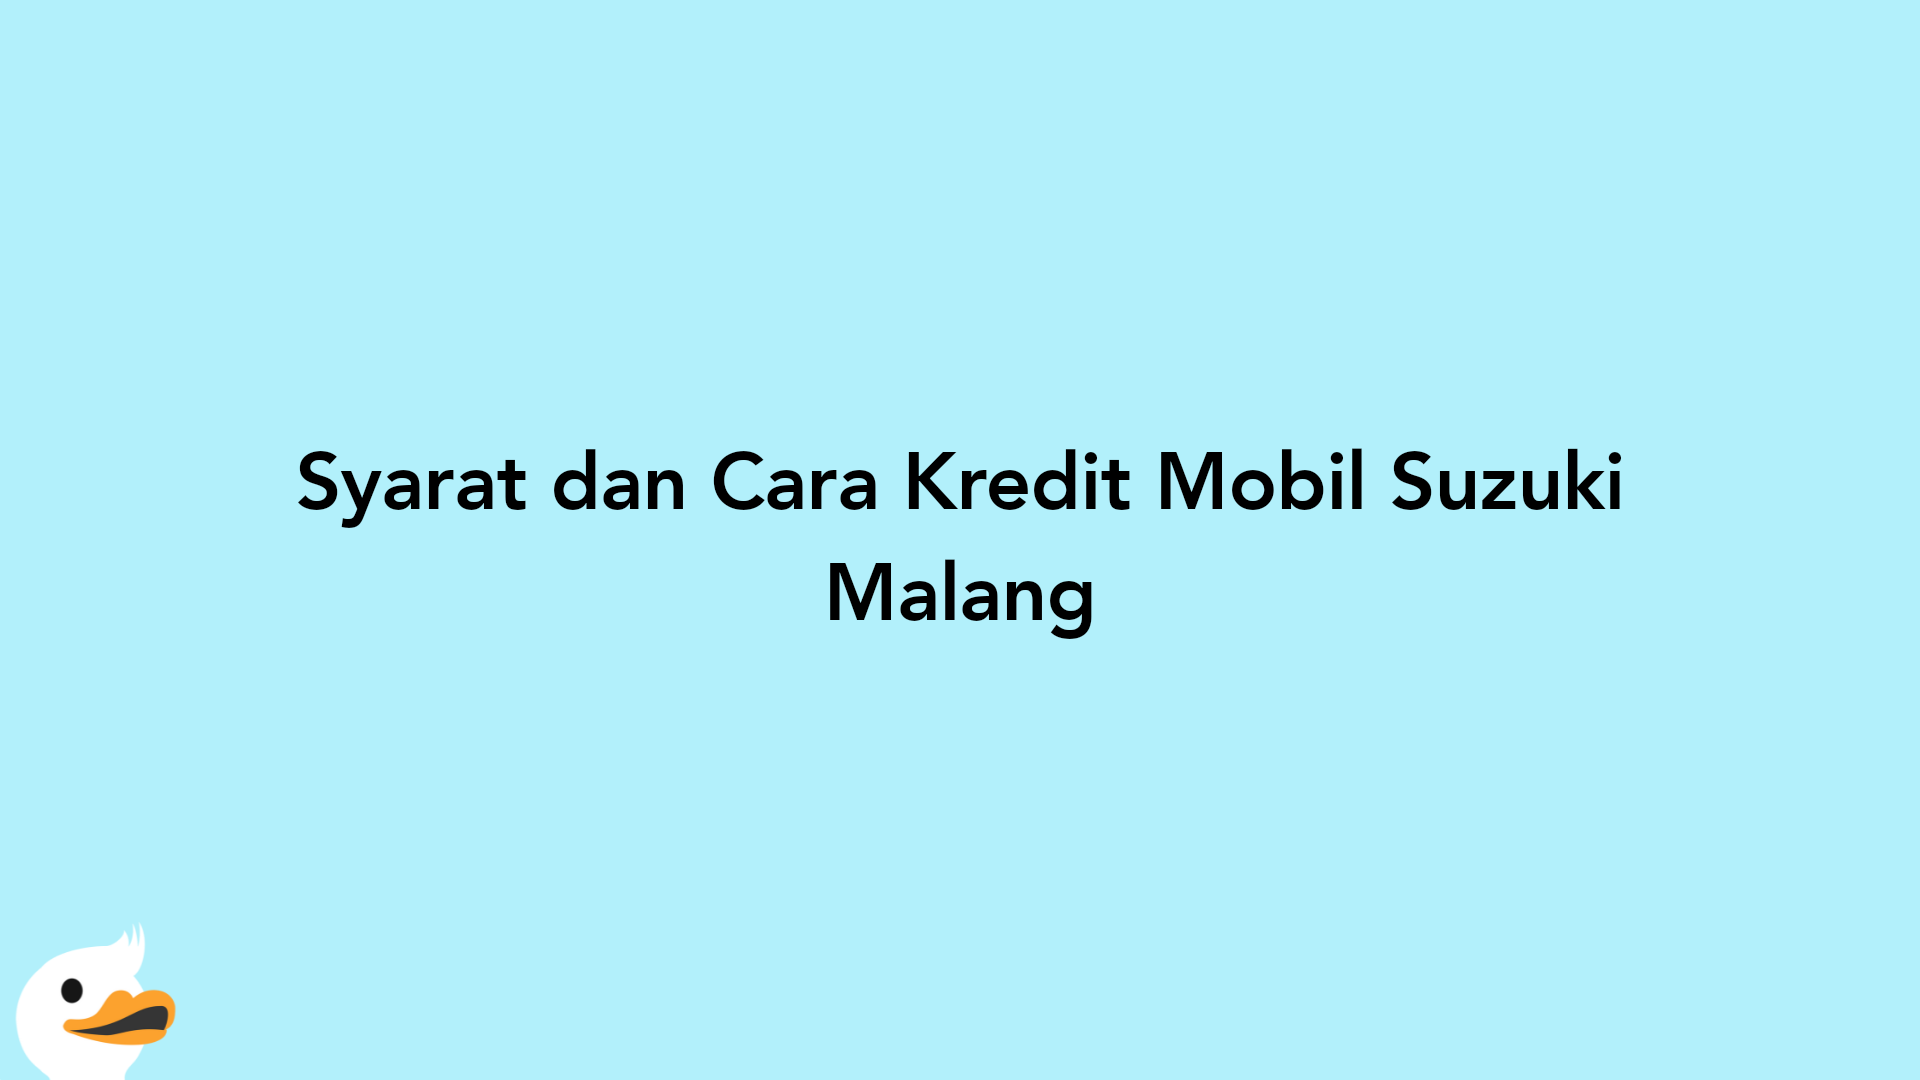 Syarat dan Cara Kredit Mobil Suzuki Malang